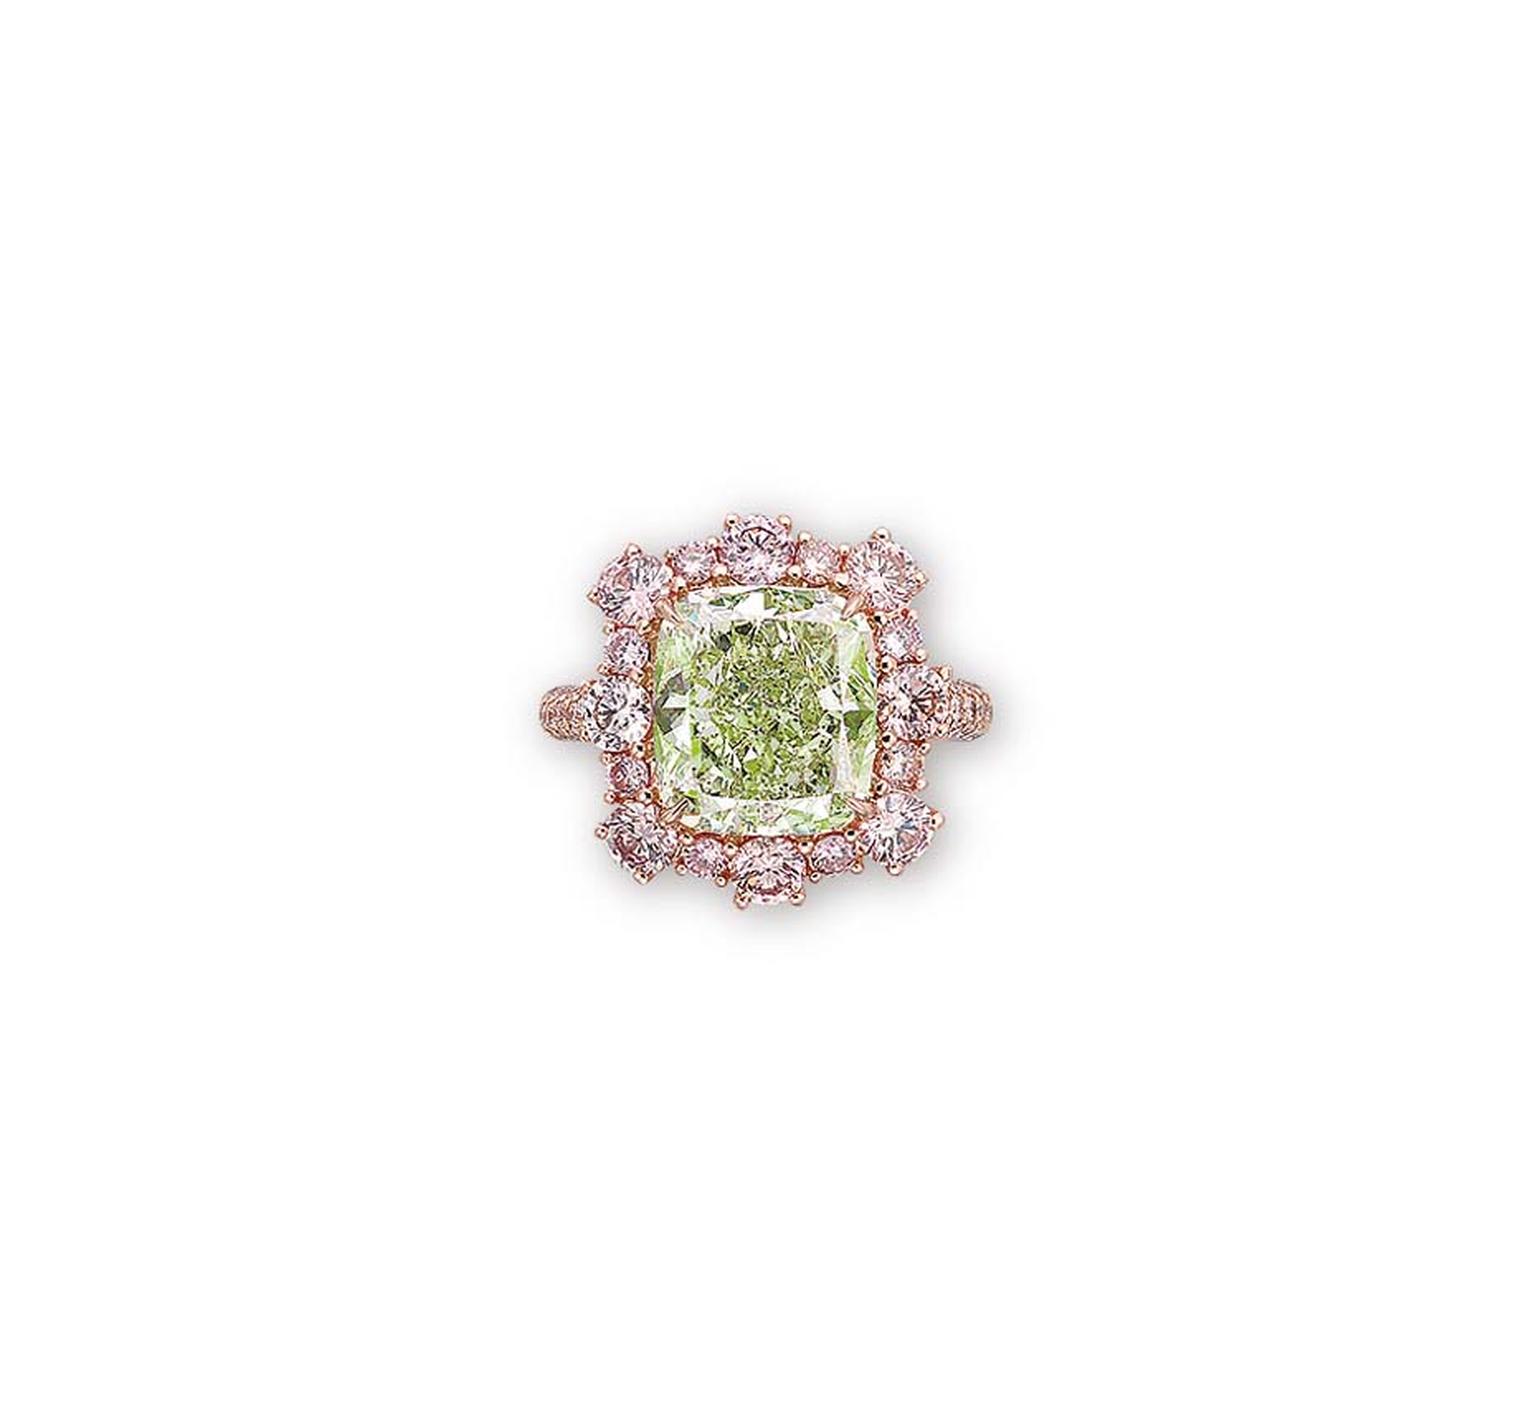 Fancy Intense 6.13ct green cushion-shaped diamond ring (estimate: US$2.5-3.8 million)